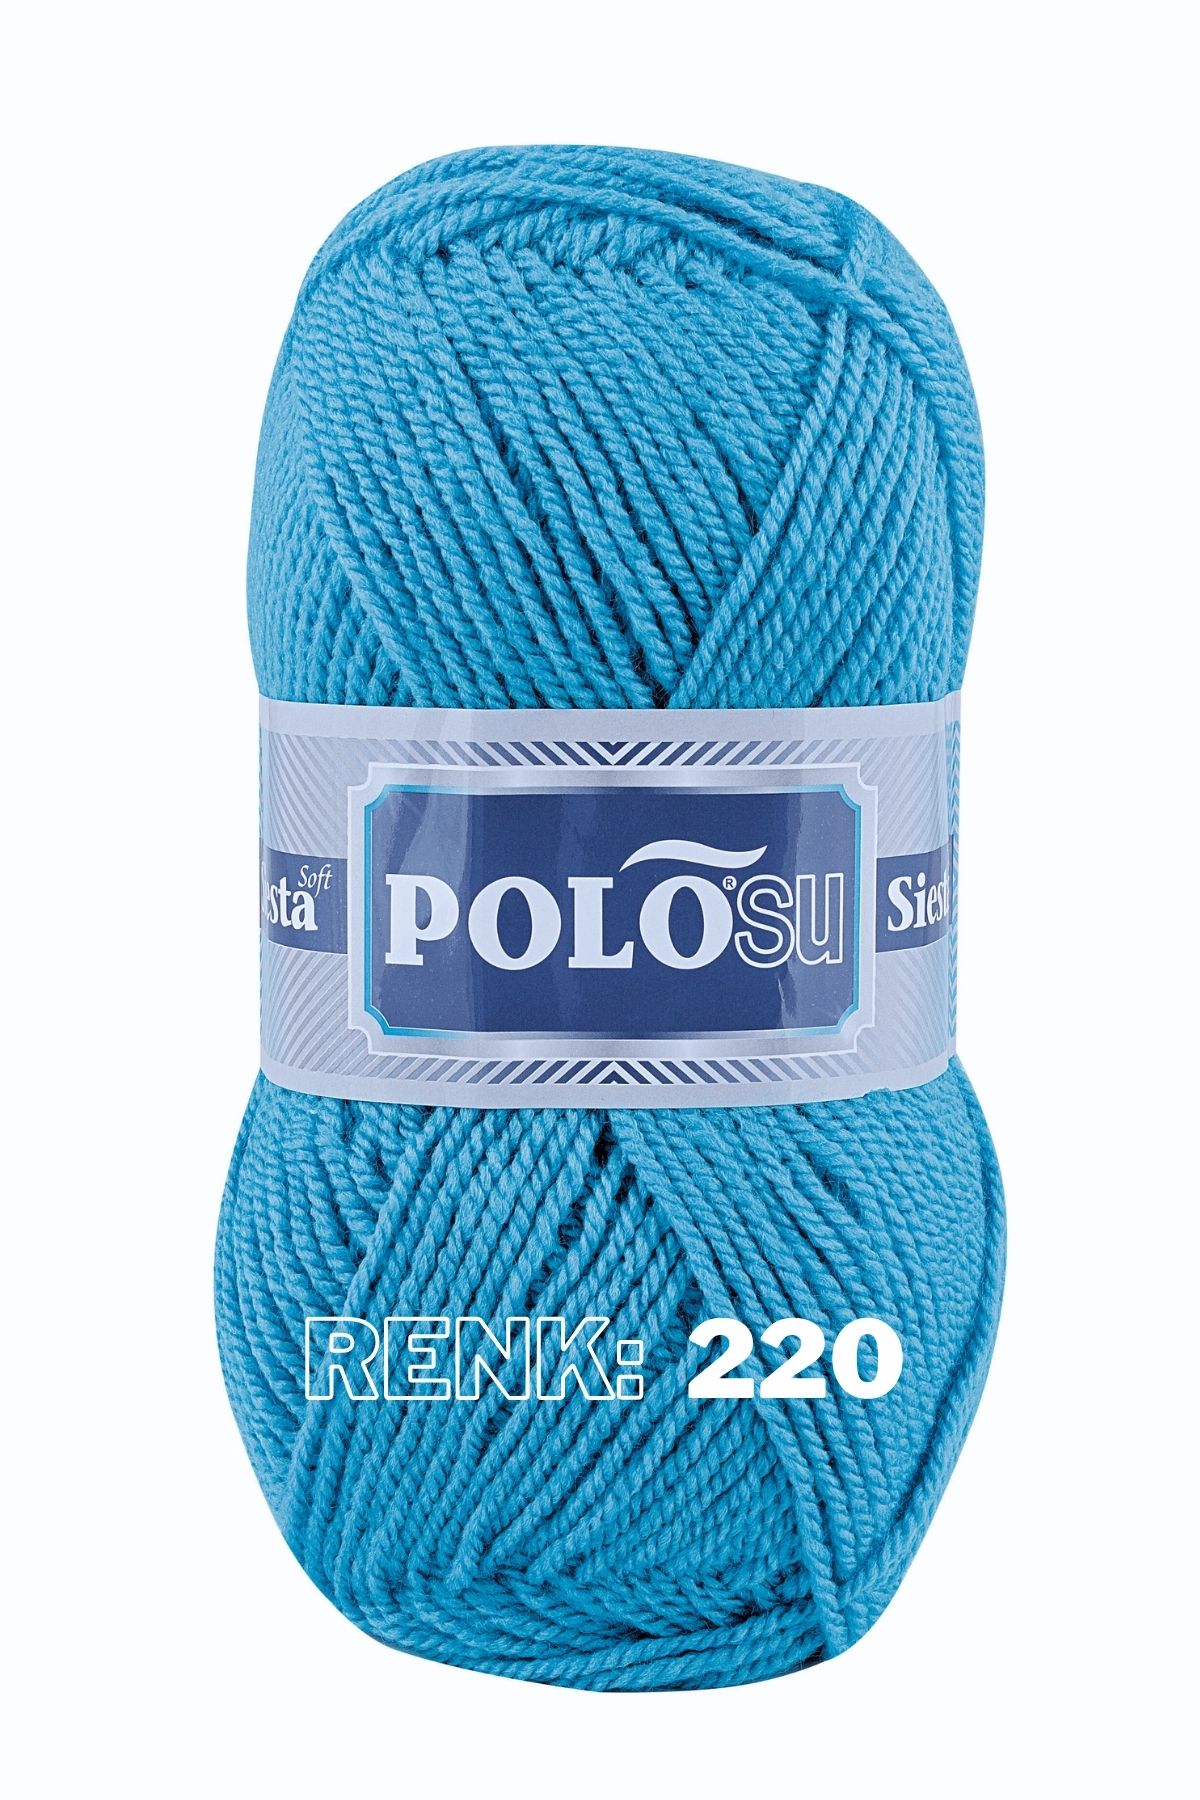 Polosu Cam Mavi Siesta Soft Atkı Yelek Kazak El Örgü Ipliği Renk: 220